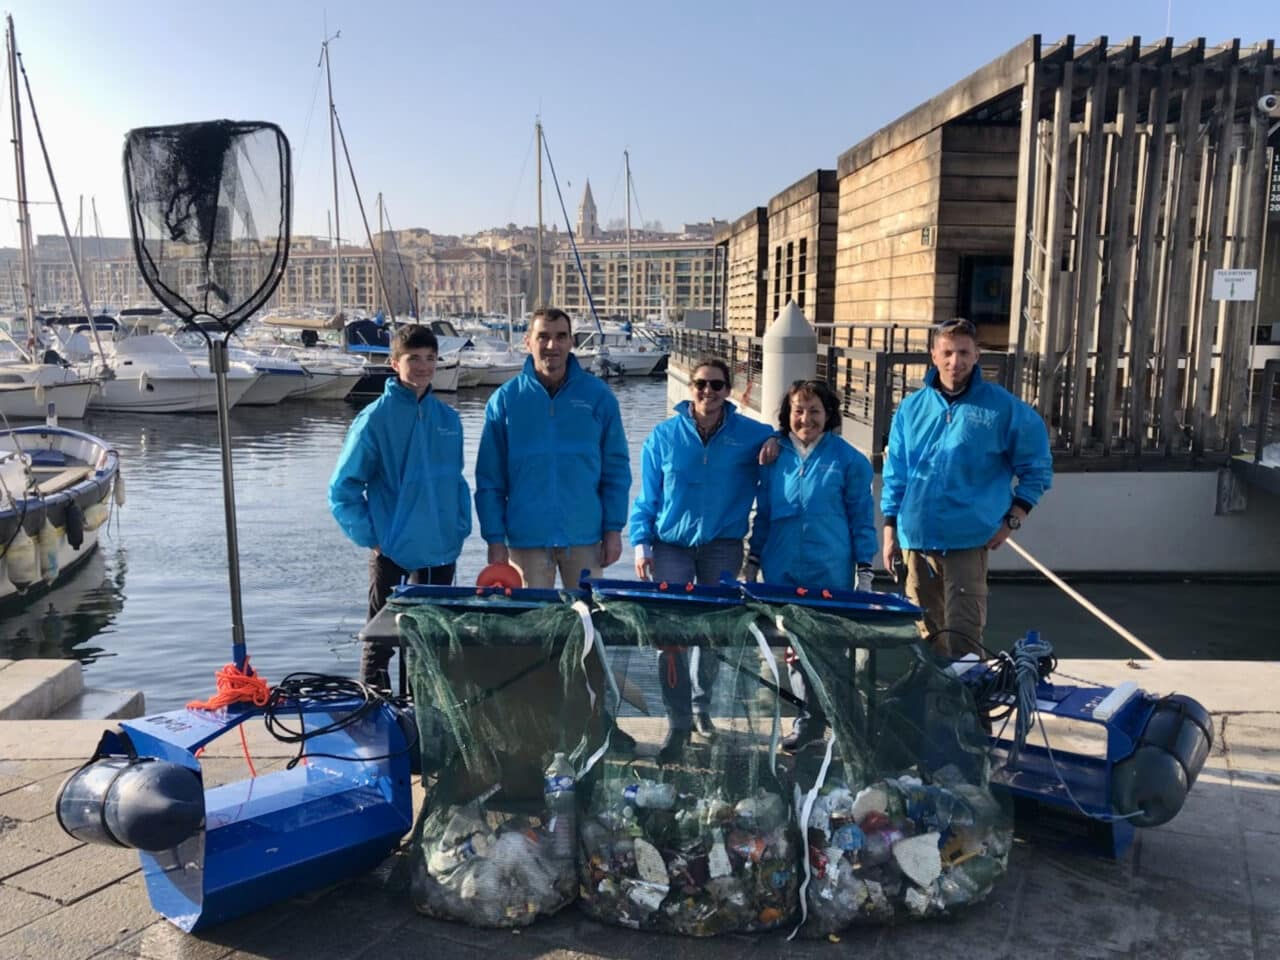 dépollution, Mission dépollution : 5 inventions marseillaises pour nettoyer la mer, Made in Marseille